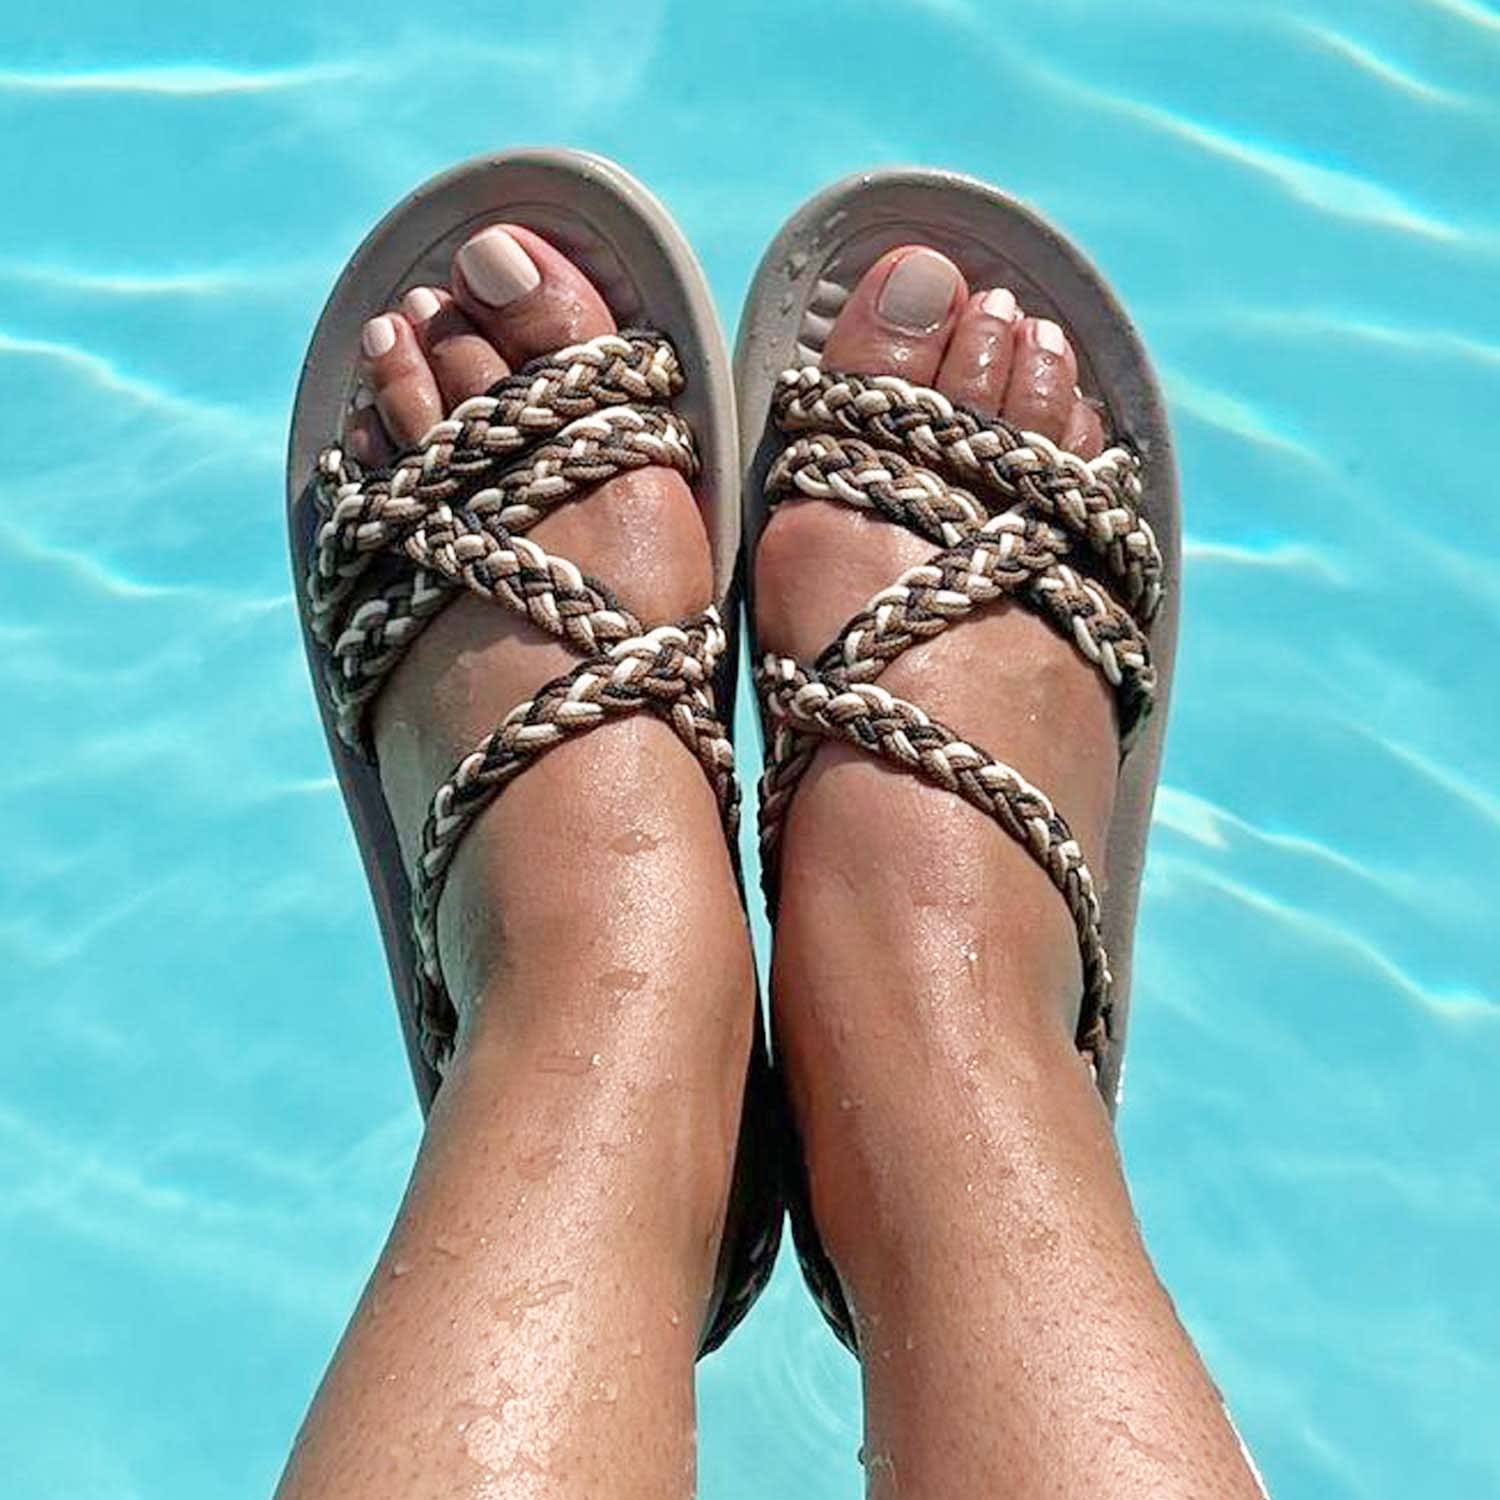  MEGNYA Women's flip Flops Sandals Arch Support,Comfortable  Walking Sandals,Water Sandals Perfect for The Beach/Long Walks/Poolside 